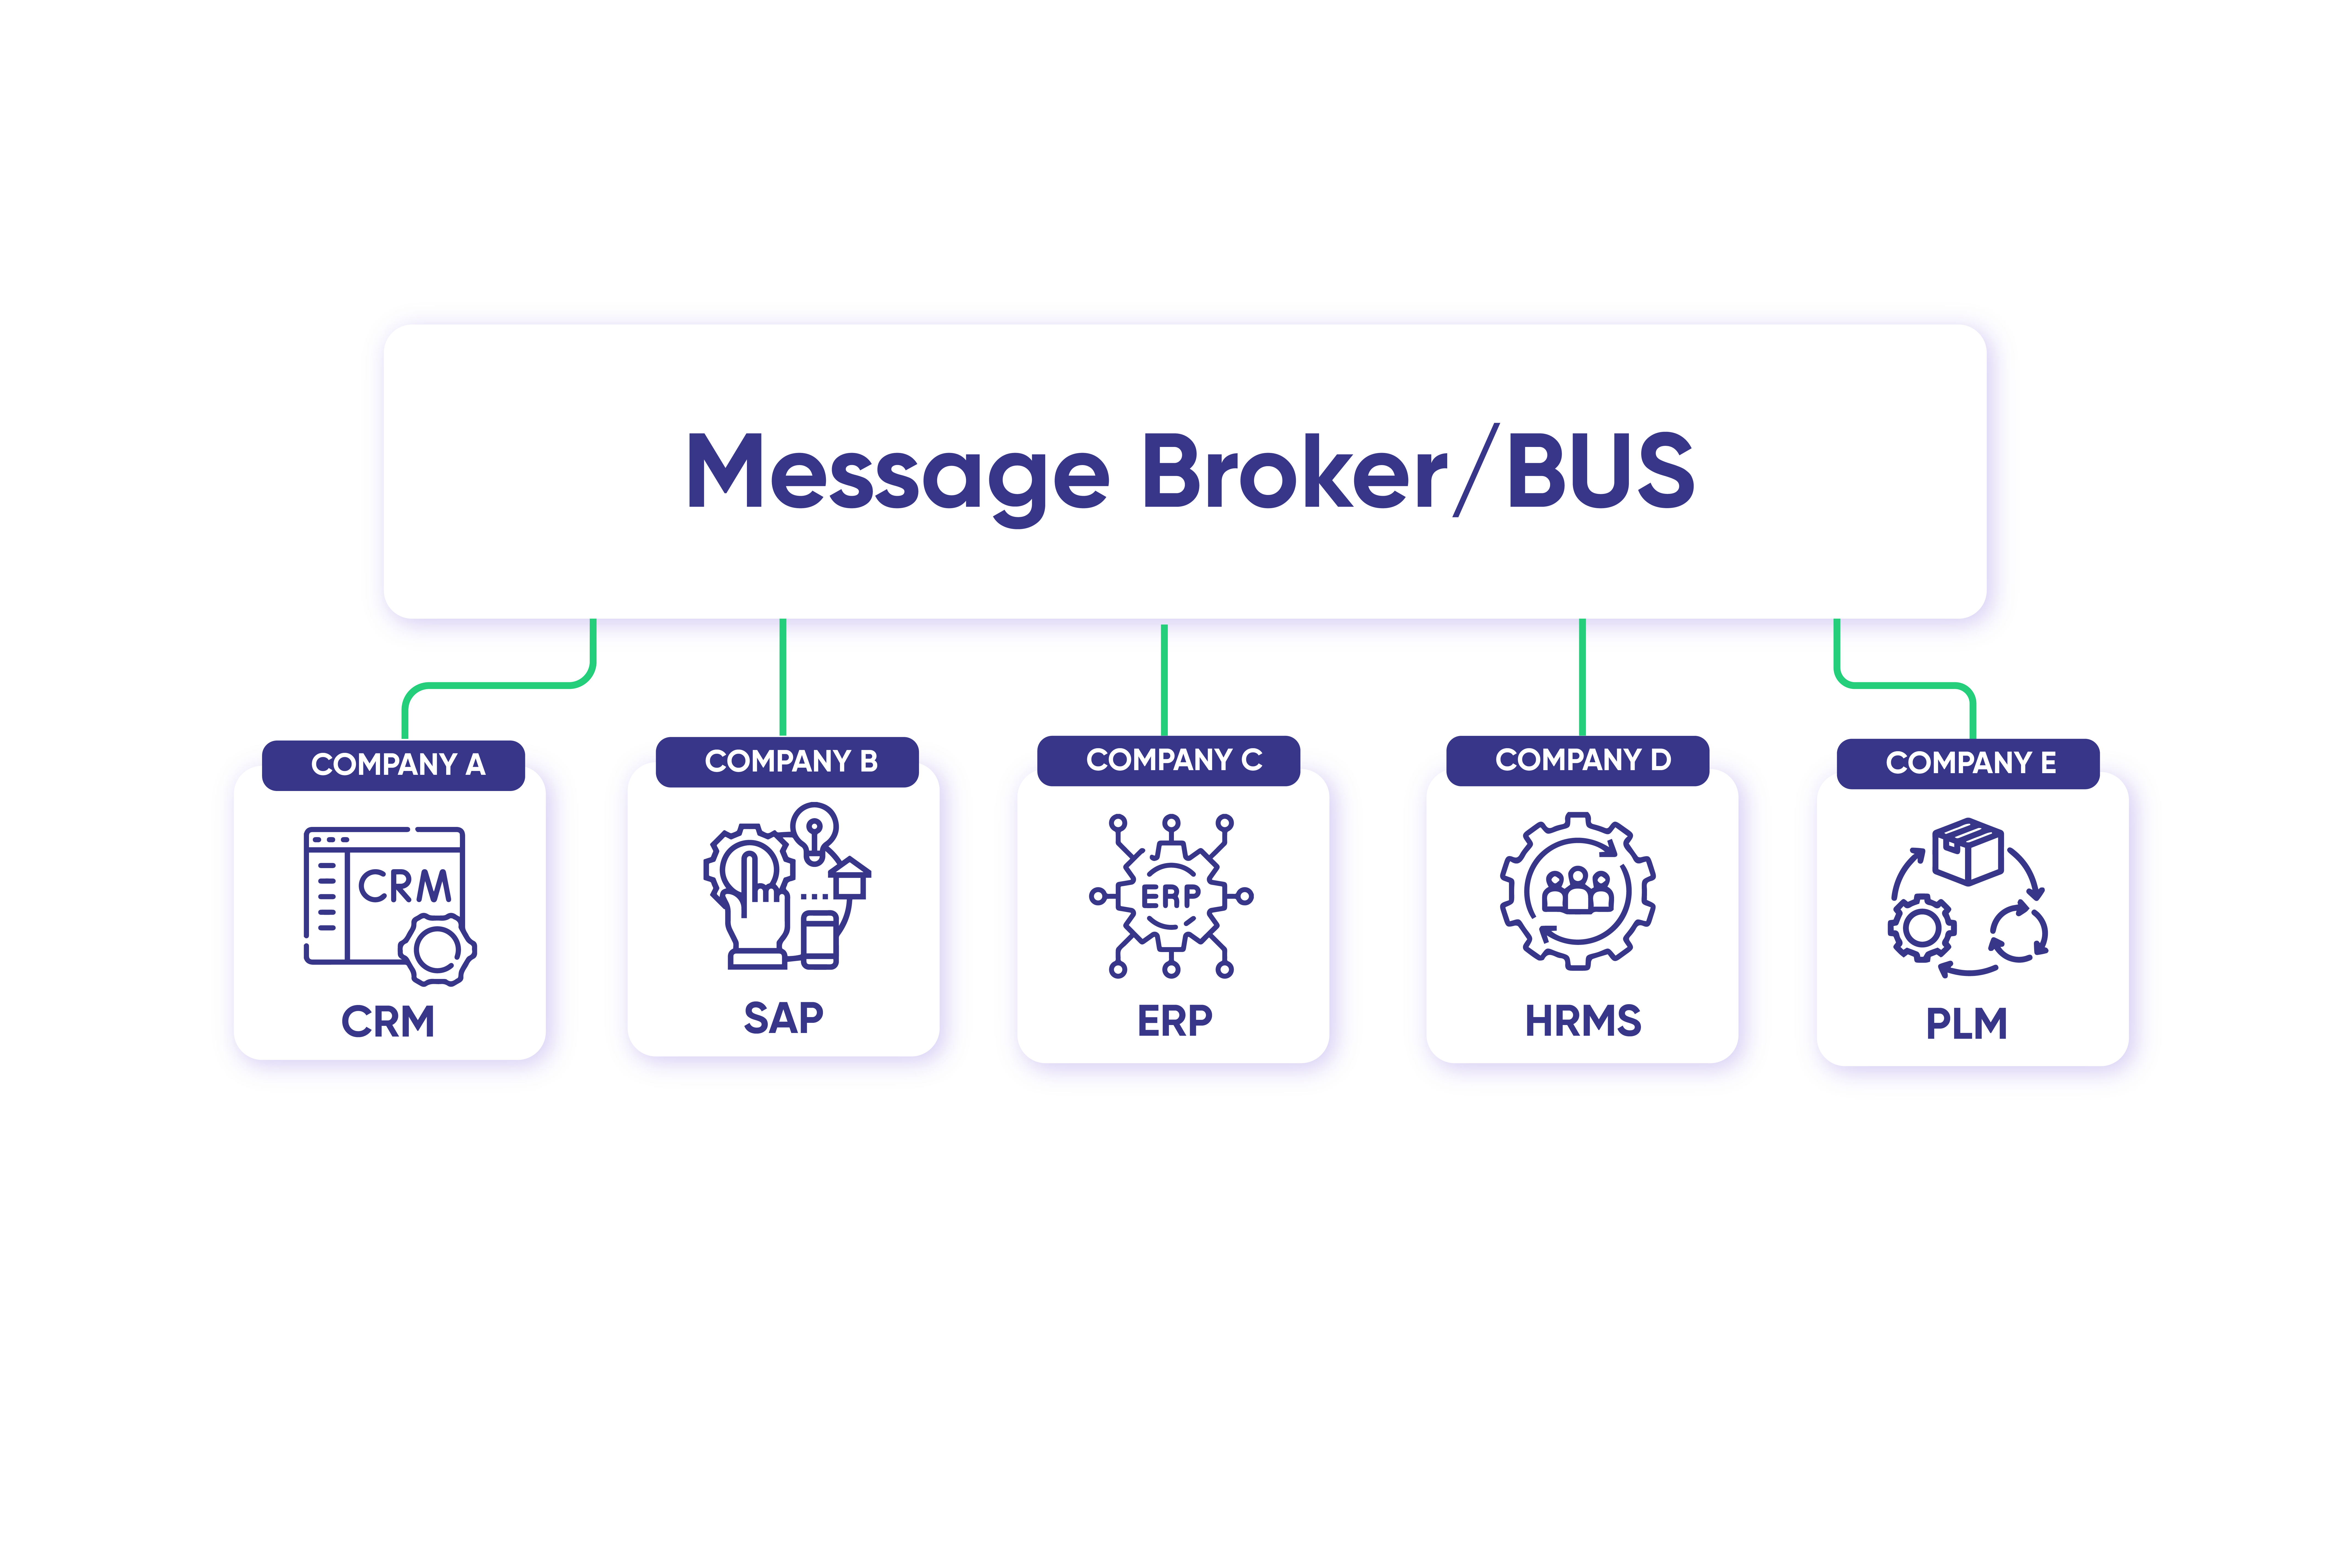 Message broker (BUS)